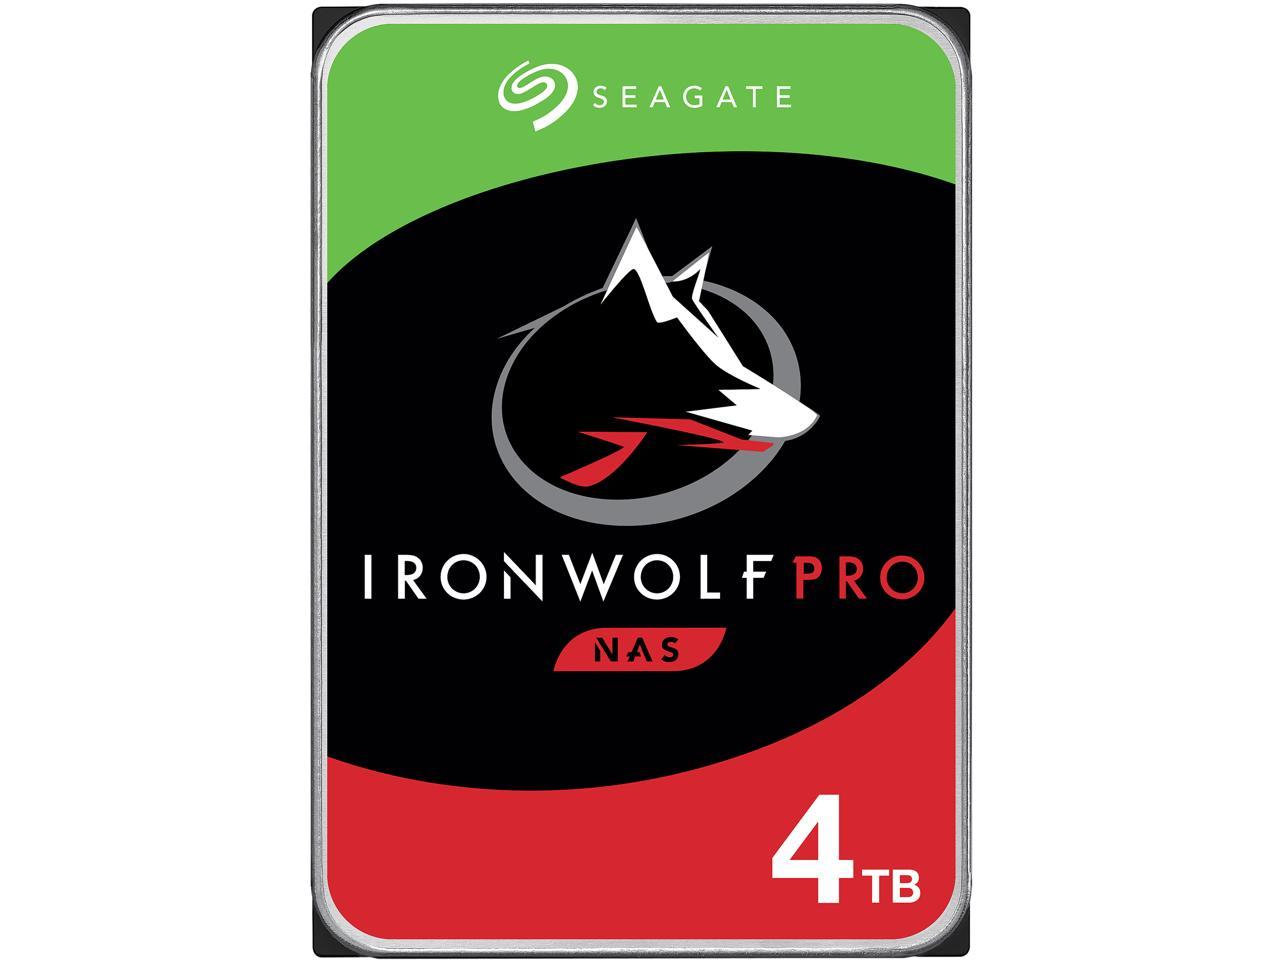 Seagate Ironwolf Pro 4Tb Nas Hard Drive 7200 Rpm 256Mb Cache Cmr Sata 6.0Gb/S 3.5" Internal Hdd St4000Ne001